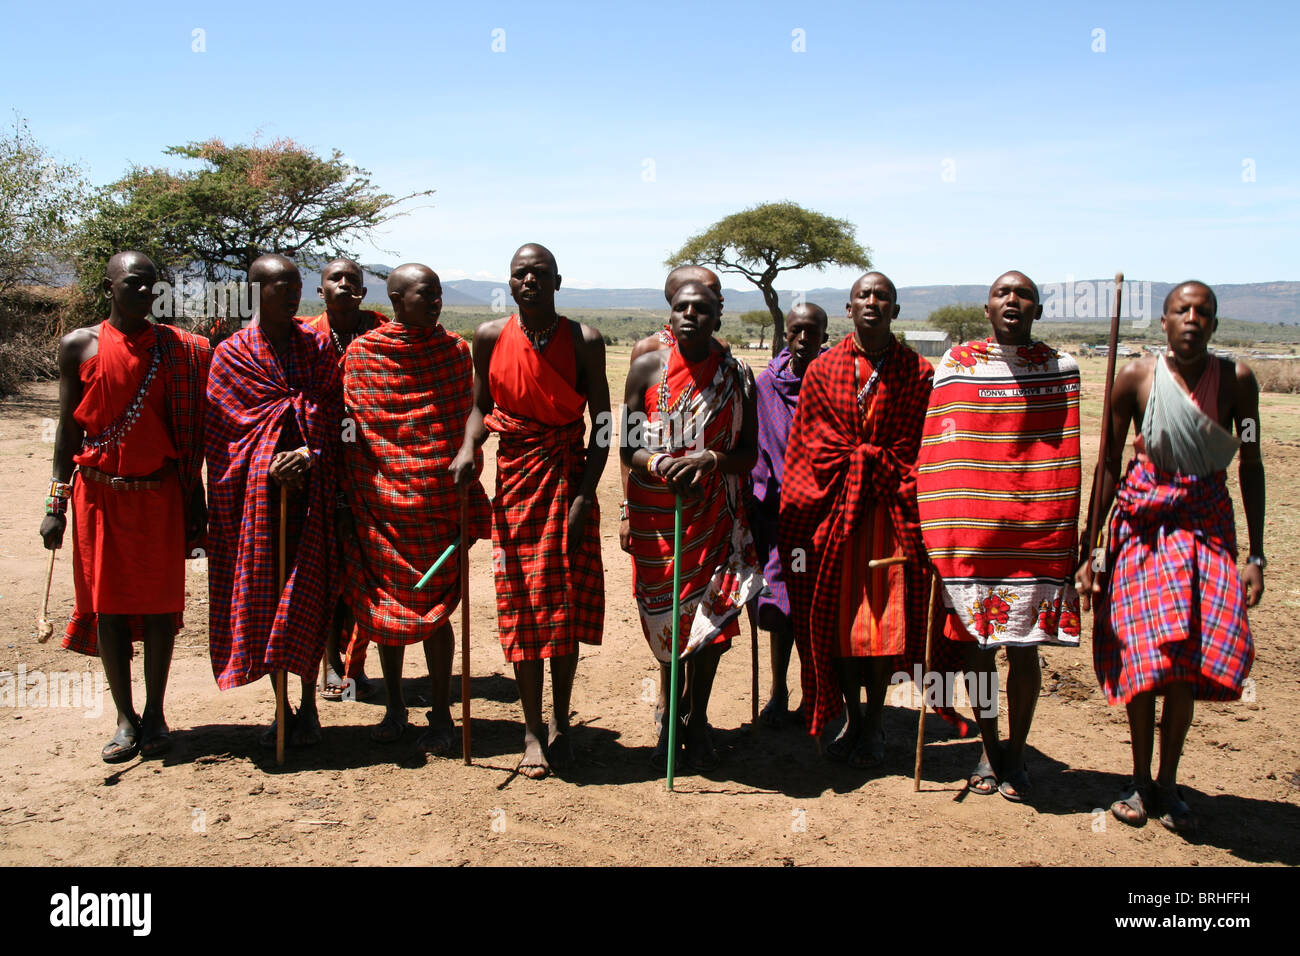 The men of the Maasai tribe in Kenia. Stock Photo